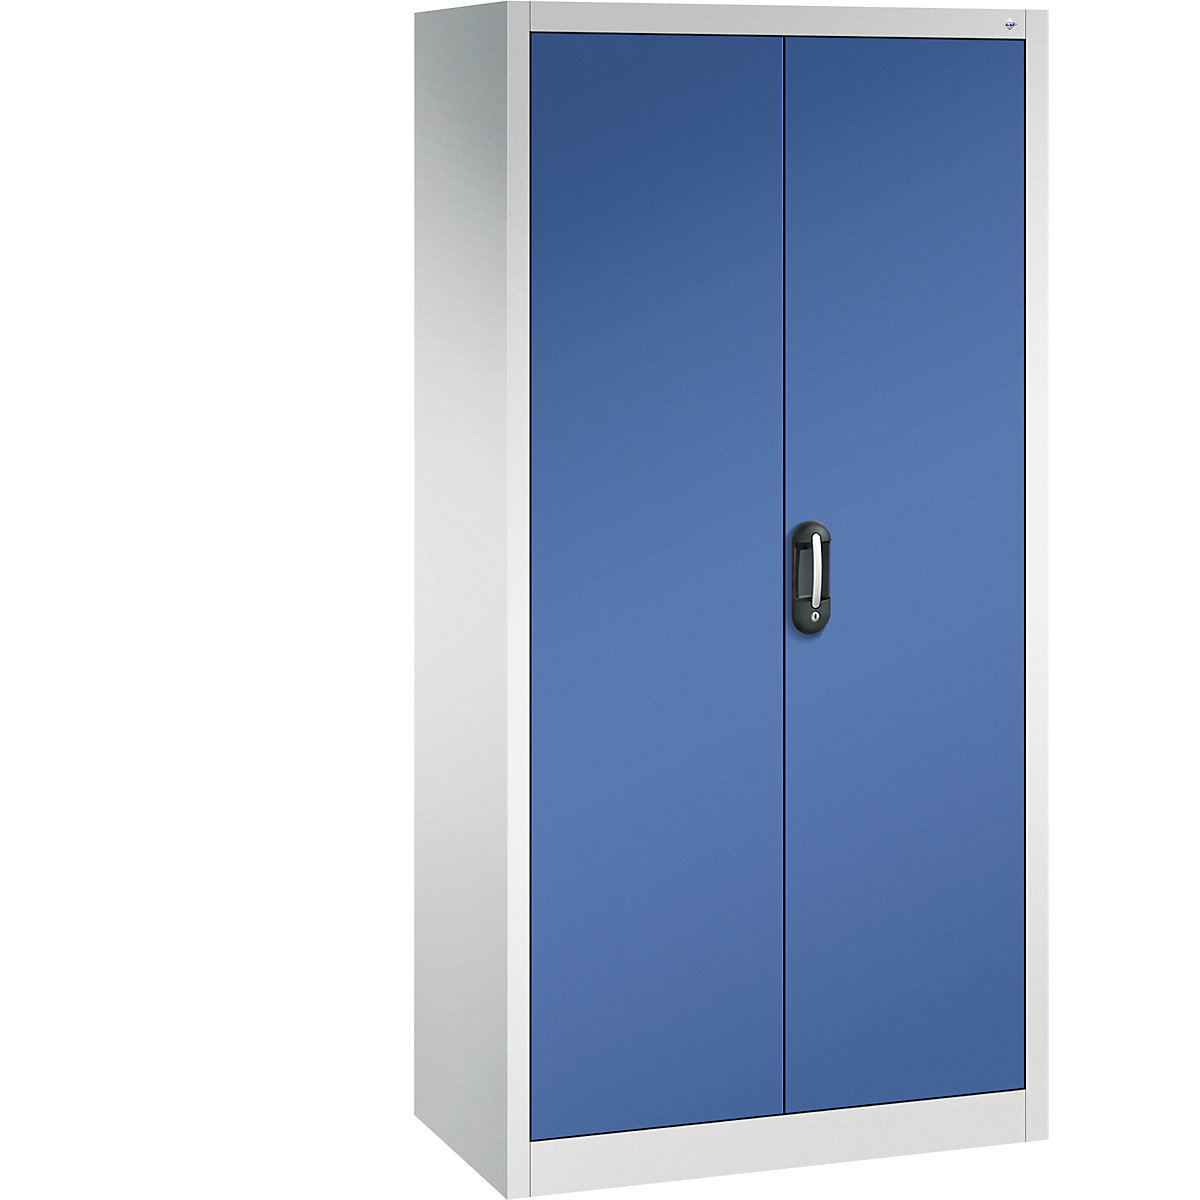 ACURADO universal cupboard – C+P, WxD 930 x 500 mm, light grey / gentian blue-24